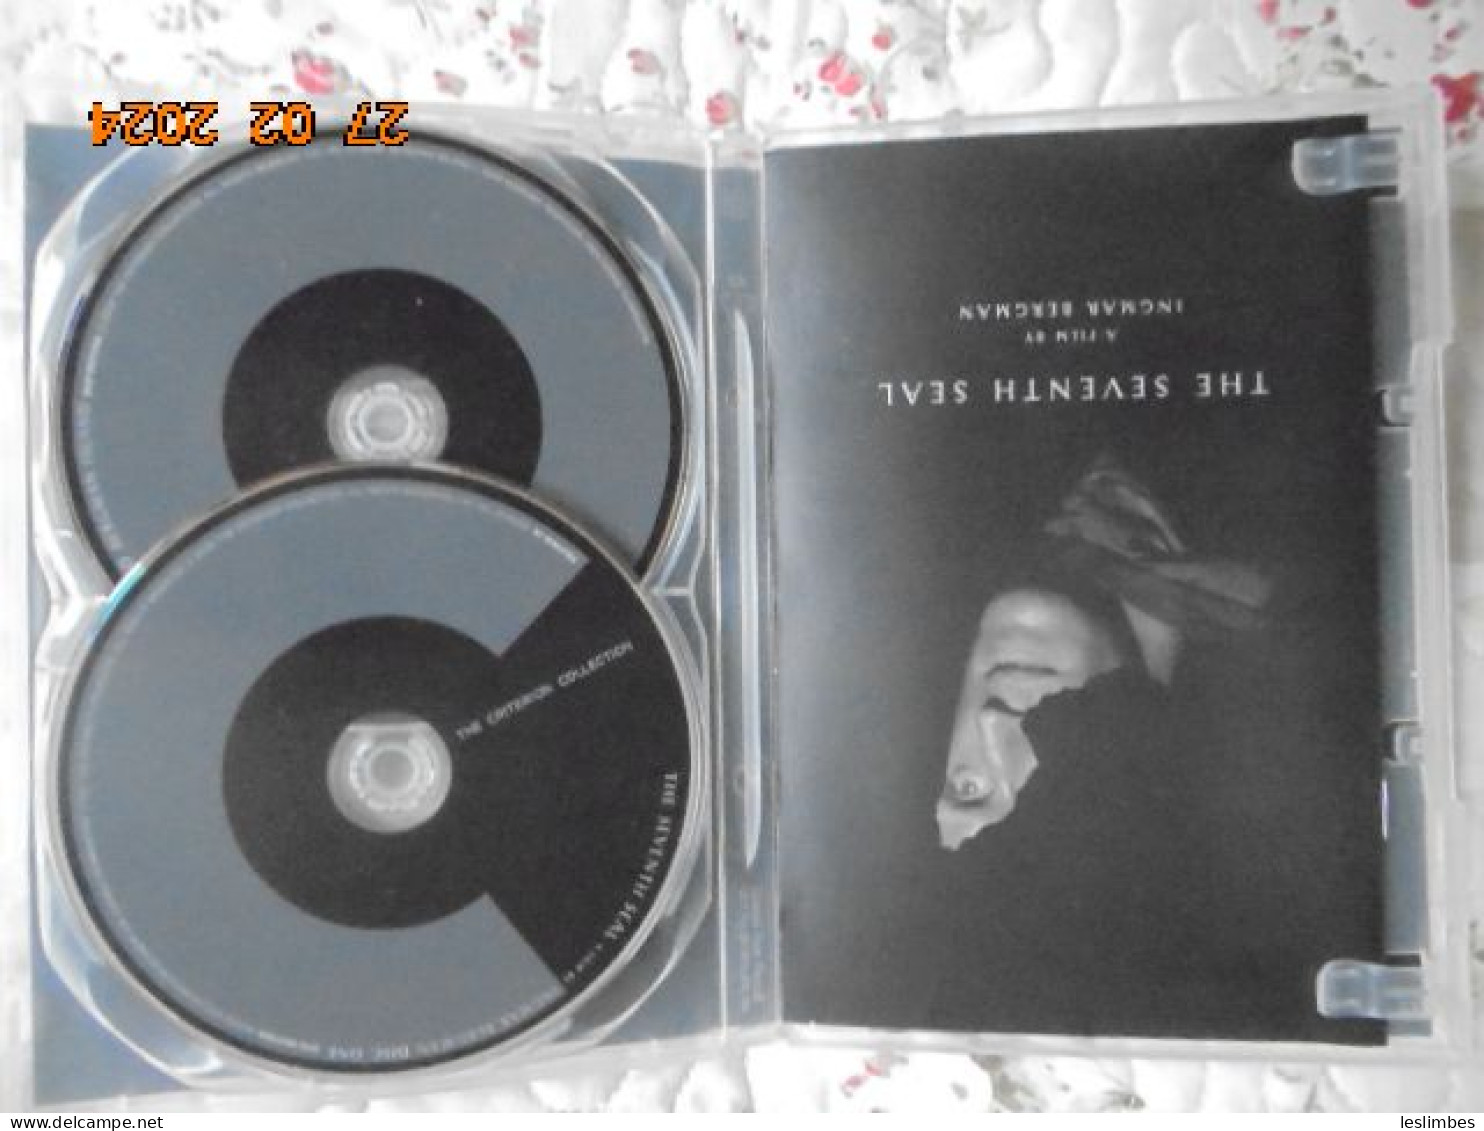 Seventh Seal (The Criterion Collection) -  [DVD] [Region 1] [US Import] [NTSC] Ingmar Bergman - Klassiekers